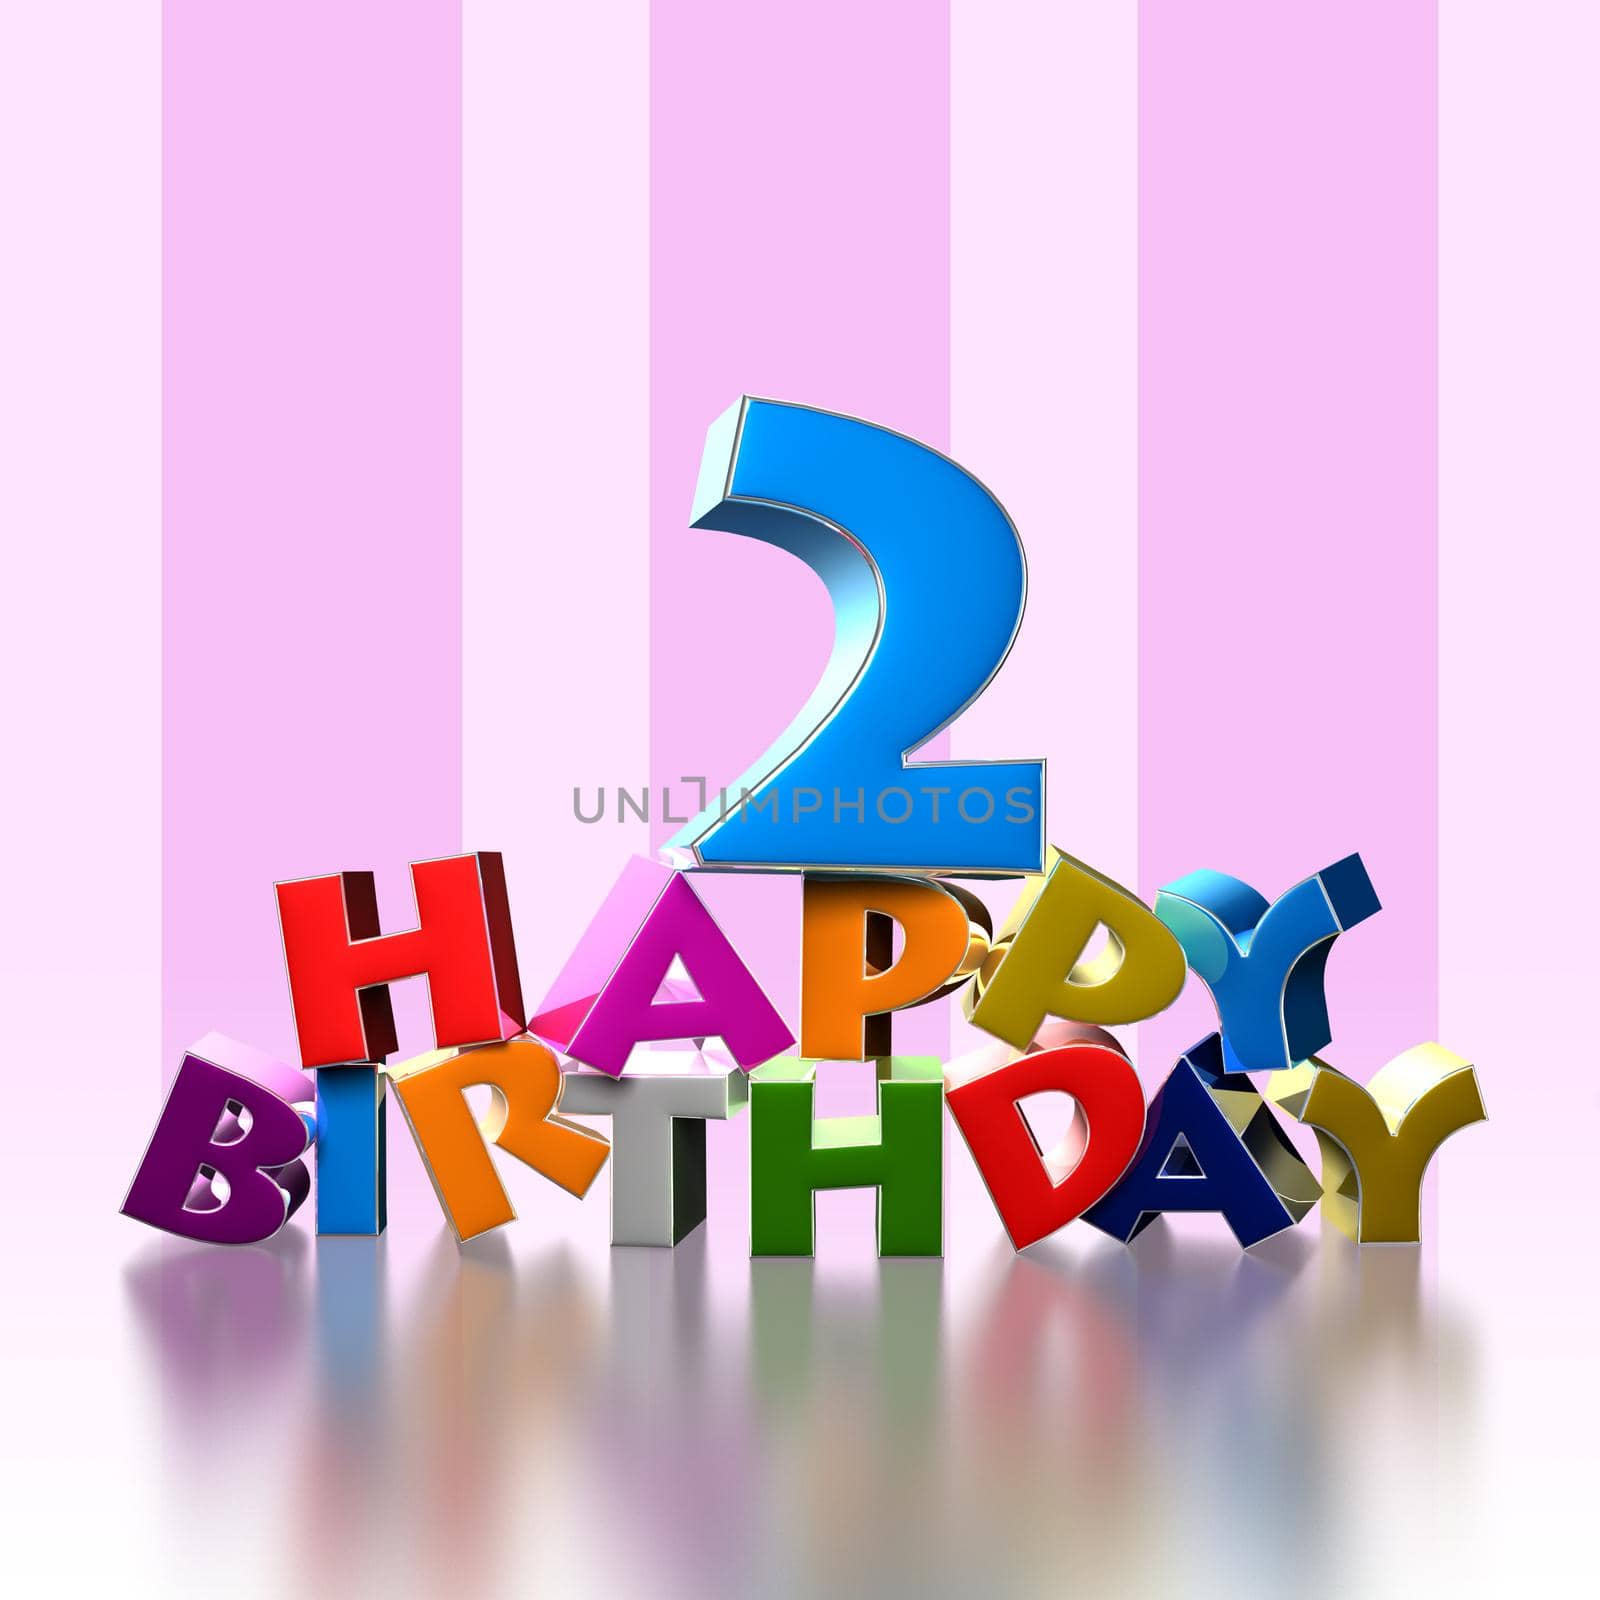 2 happy birthday 3D illustration on pink background.